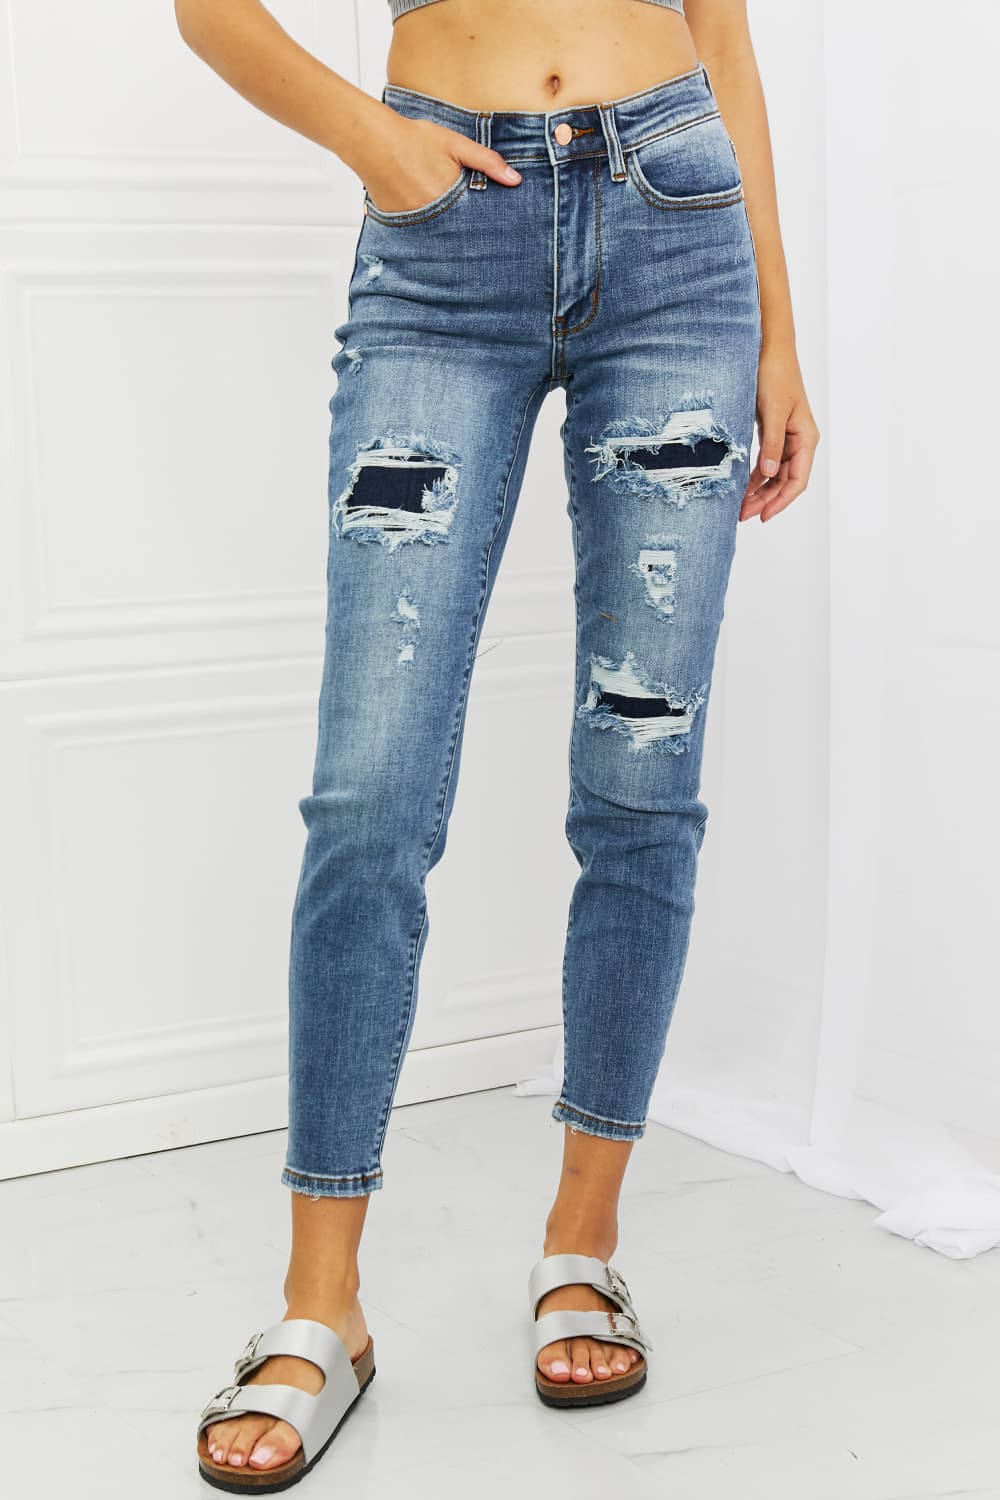 Judy Blue* Dahlia Patch Jeans